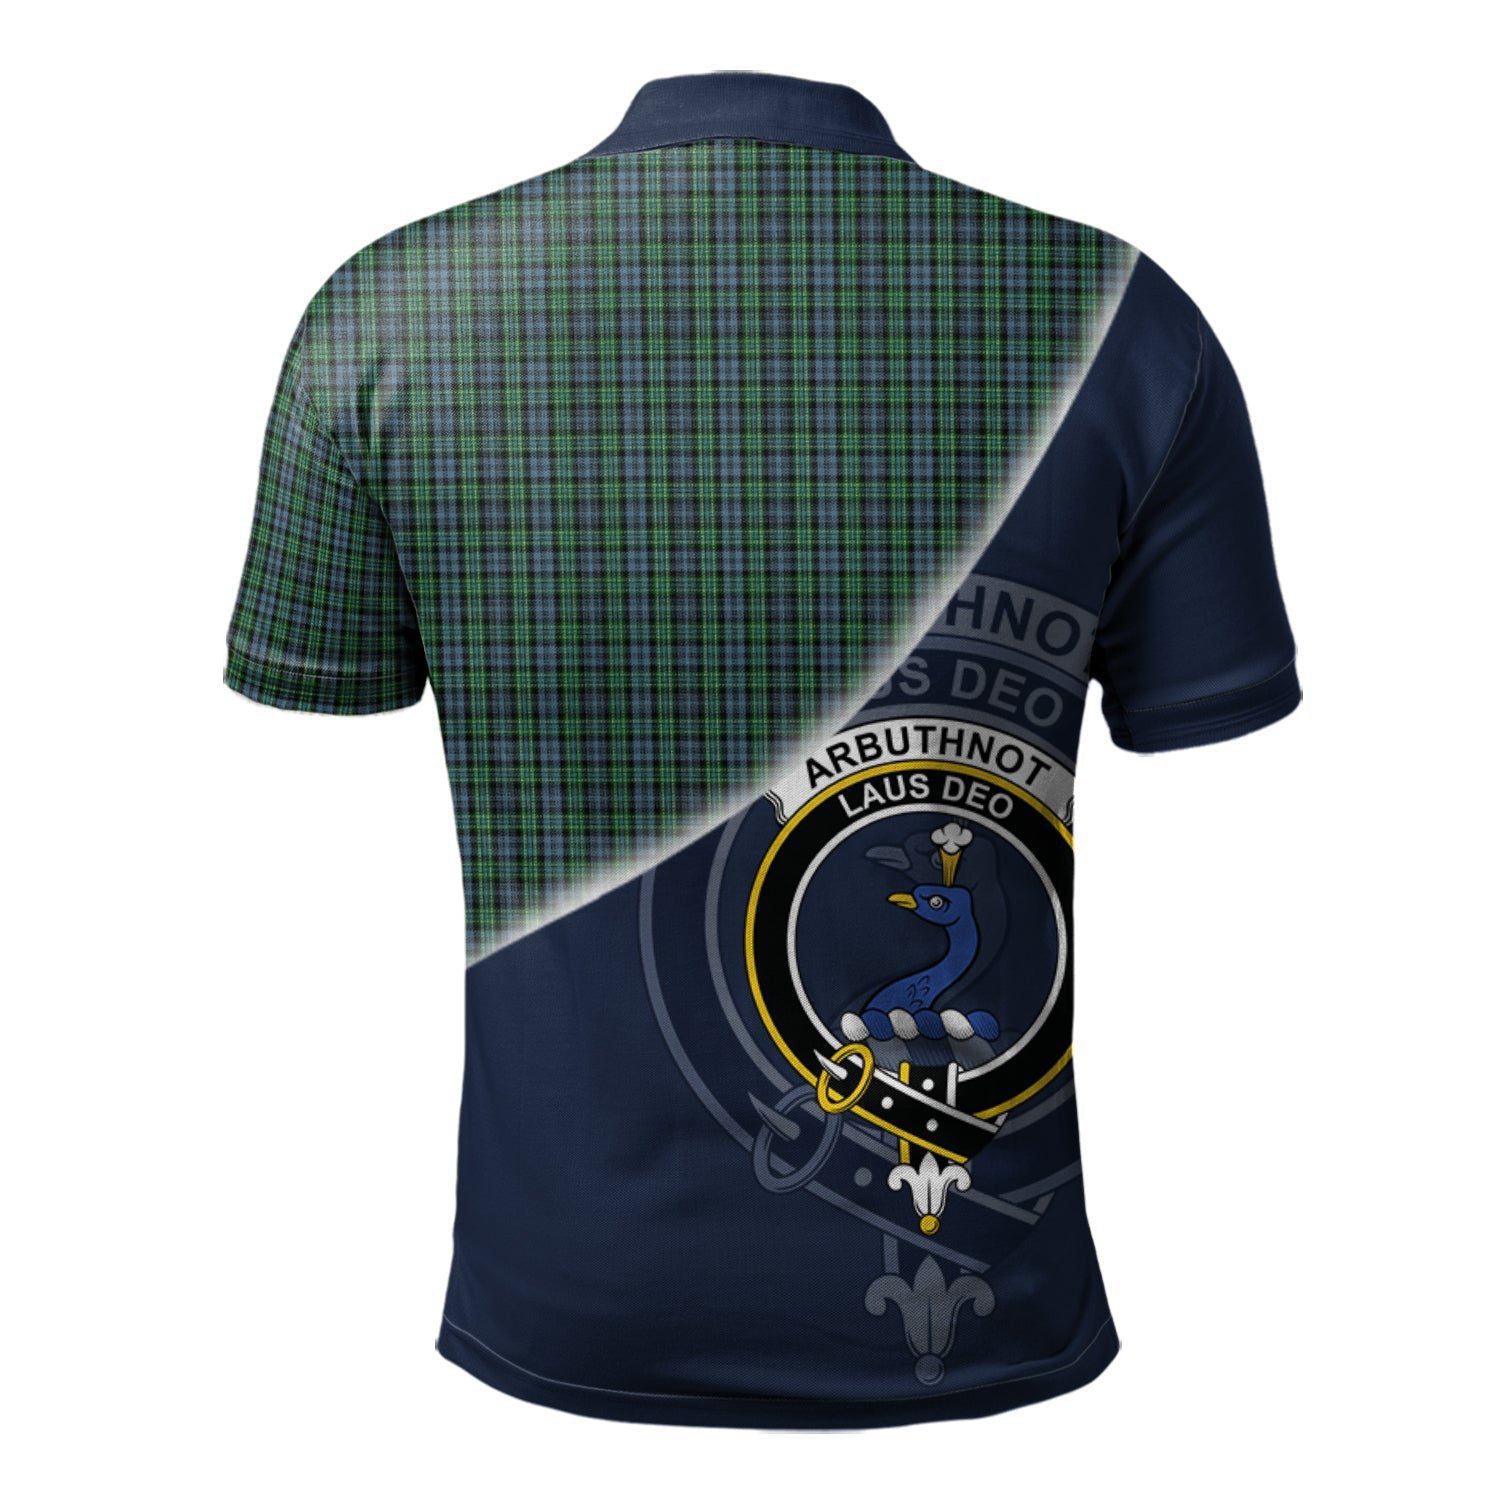 Arbuthnot Clan Scotland Golf Polo, Tartan Mens Polo Shirts with Scottish Flag Half Style K23